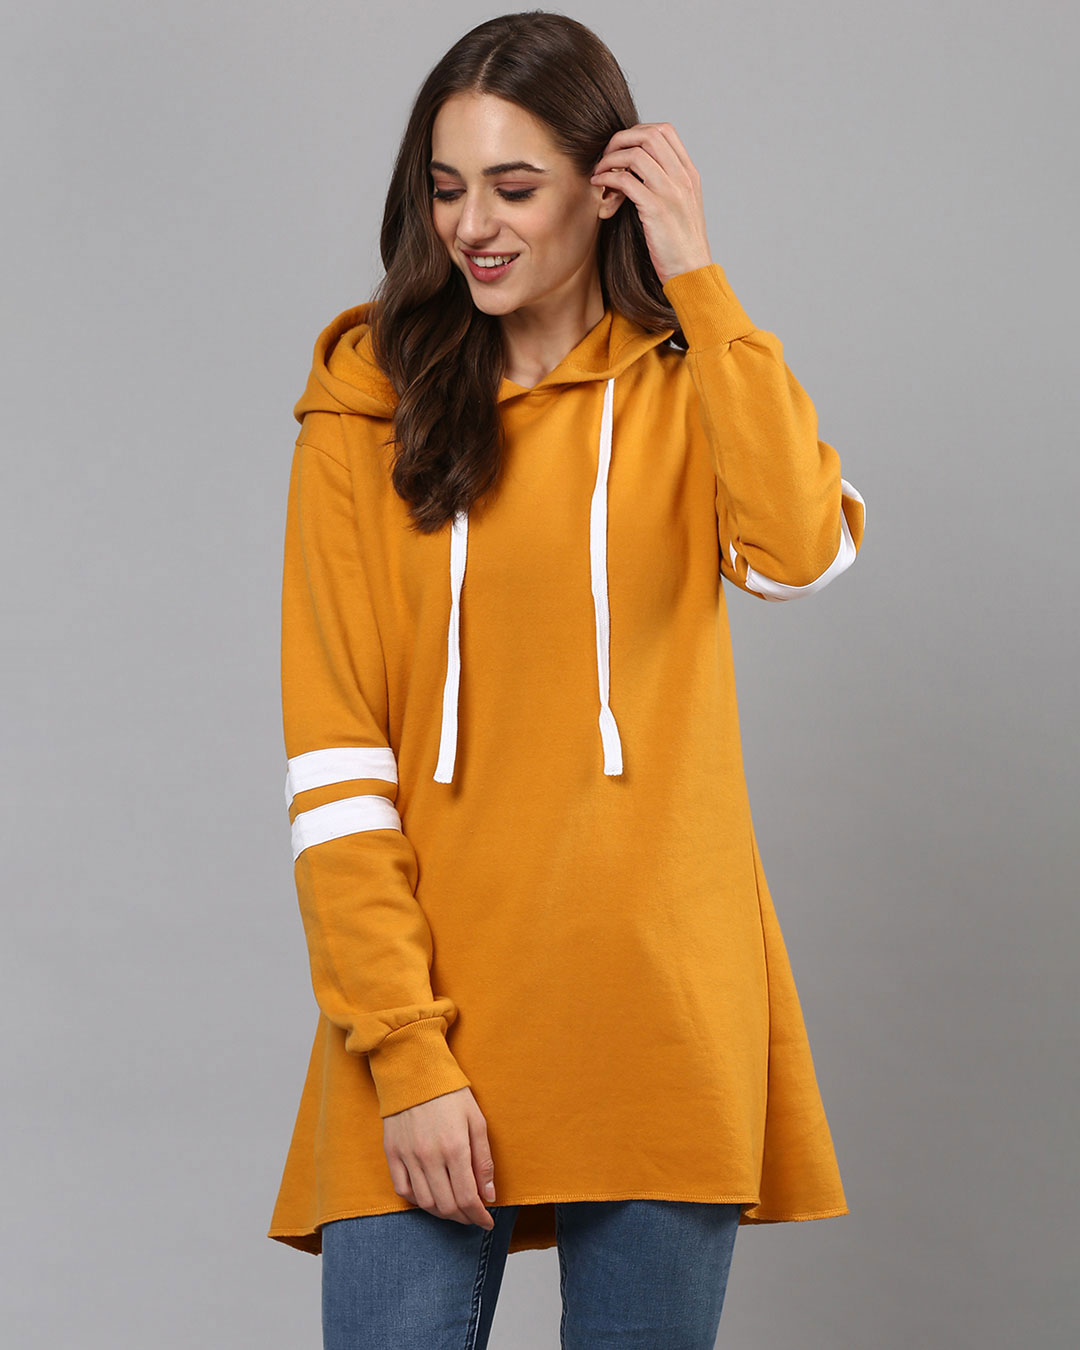 Buy Women S Yellow Solid Stylish A Line Casual Winter Sweatshirt For Women Yellow Online At Bewakoof